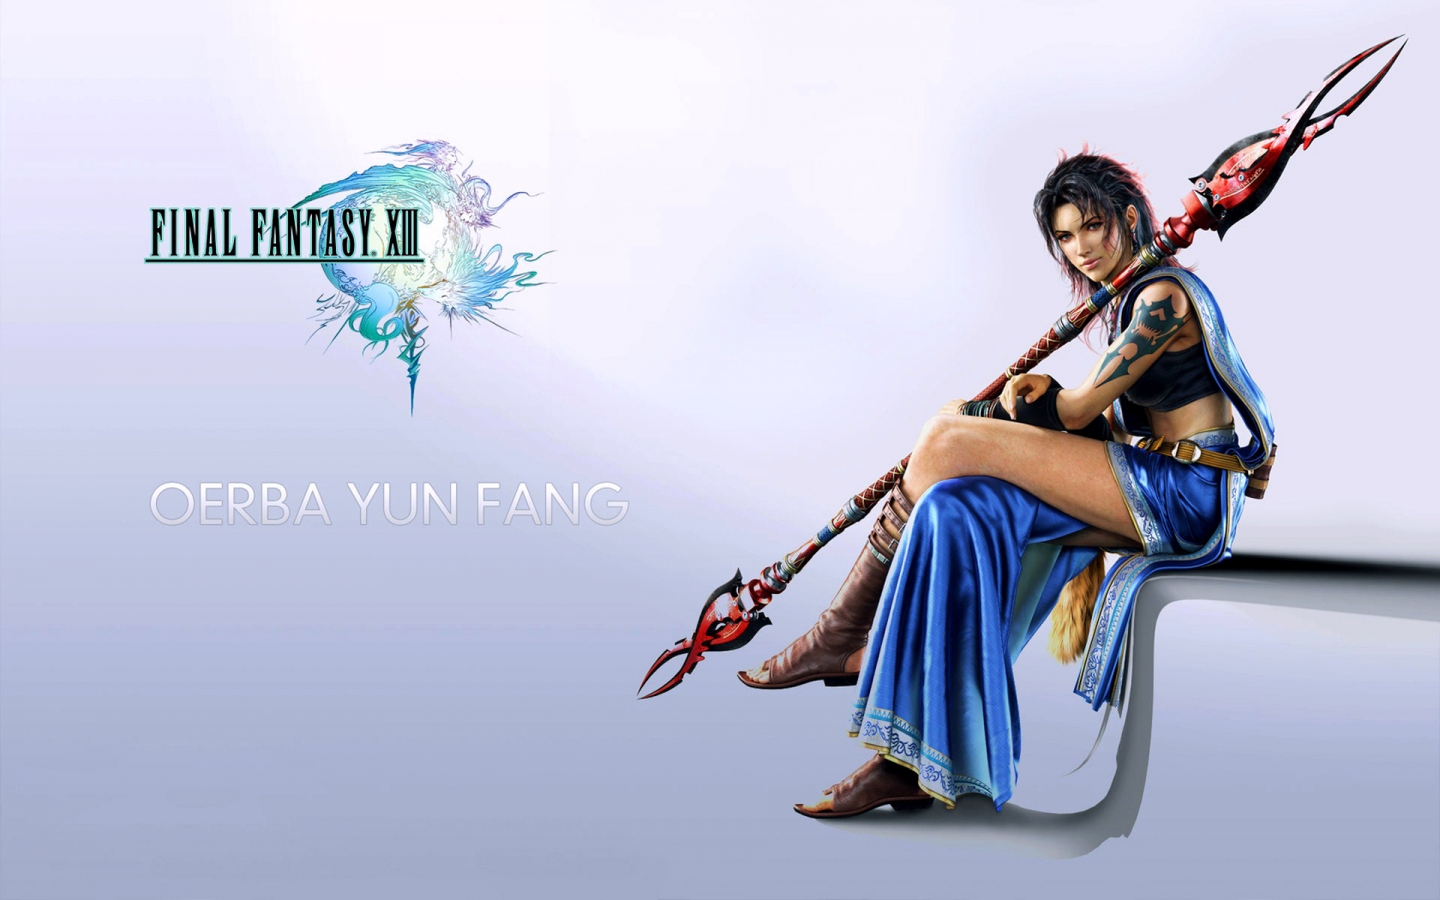 Final Fantasy XIII Oerba Yun Fang for 1440 x 900 widescreen resolution